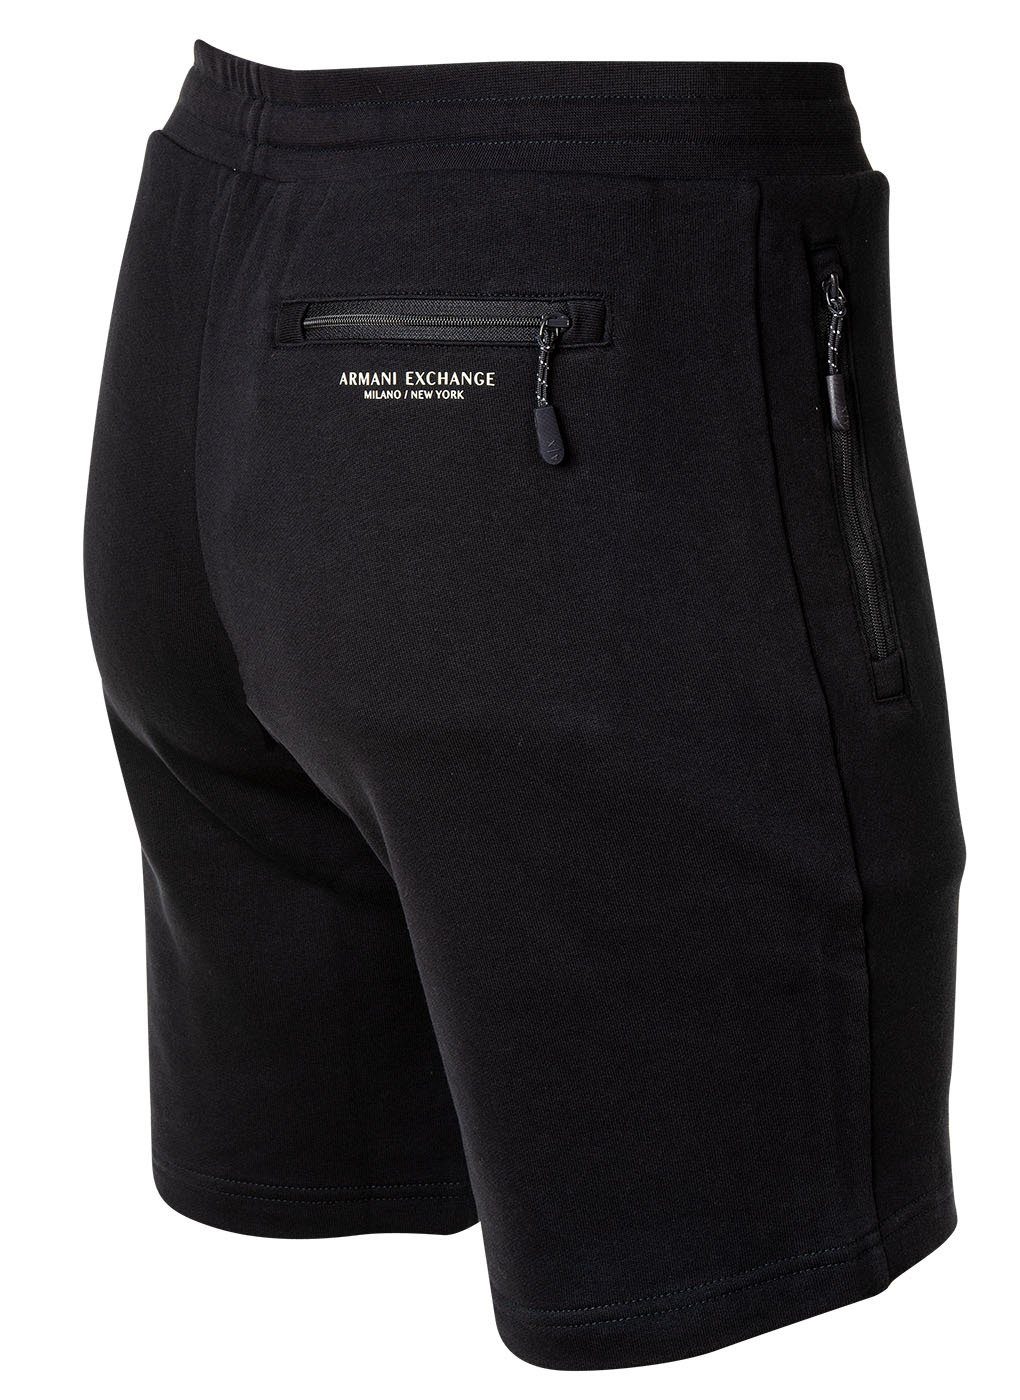 kurz Herren Pants, Jogginghose EXCHANGE Marine Sweatshorts ARMANI - Loungewear